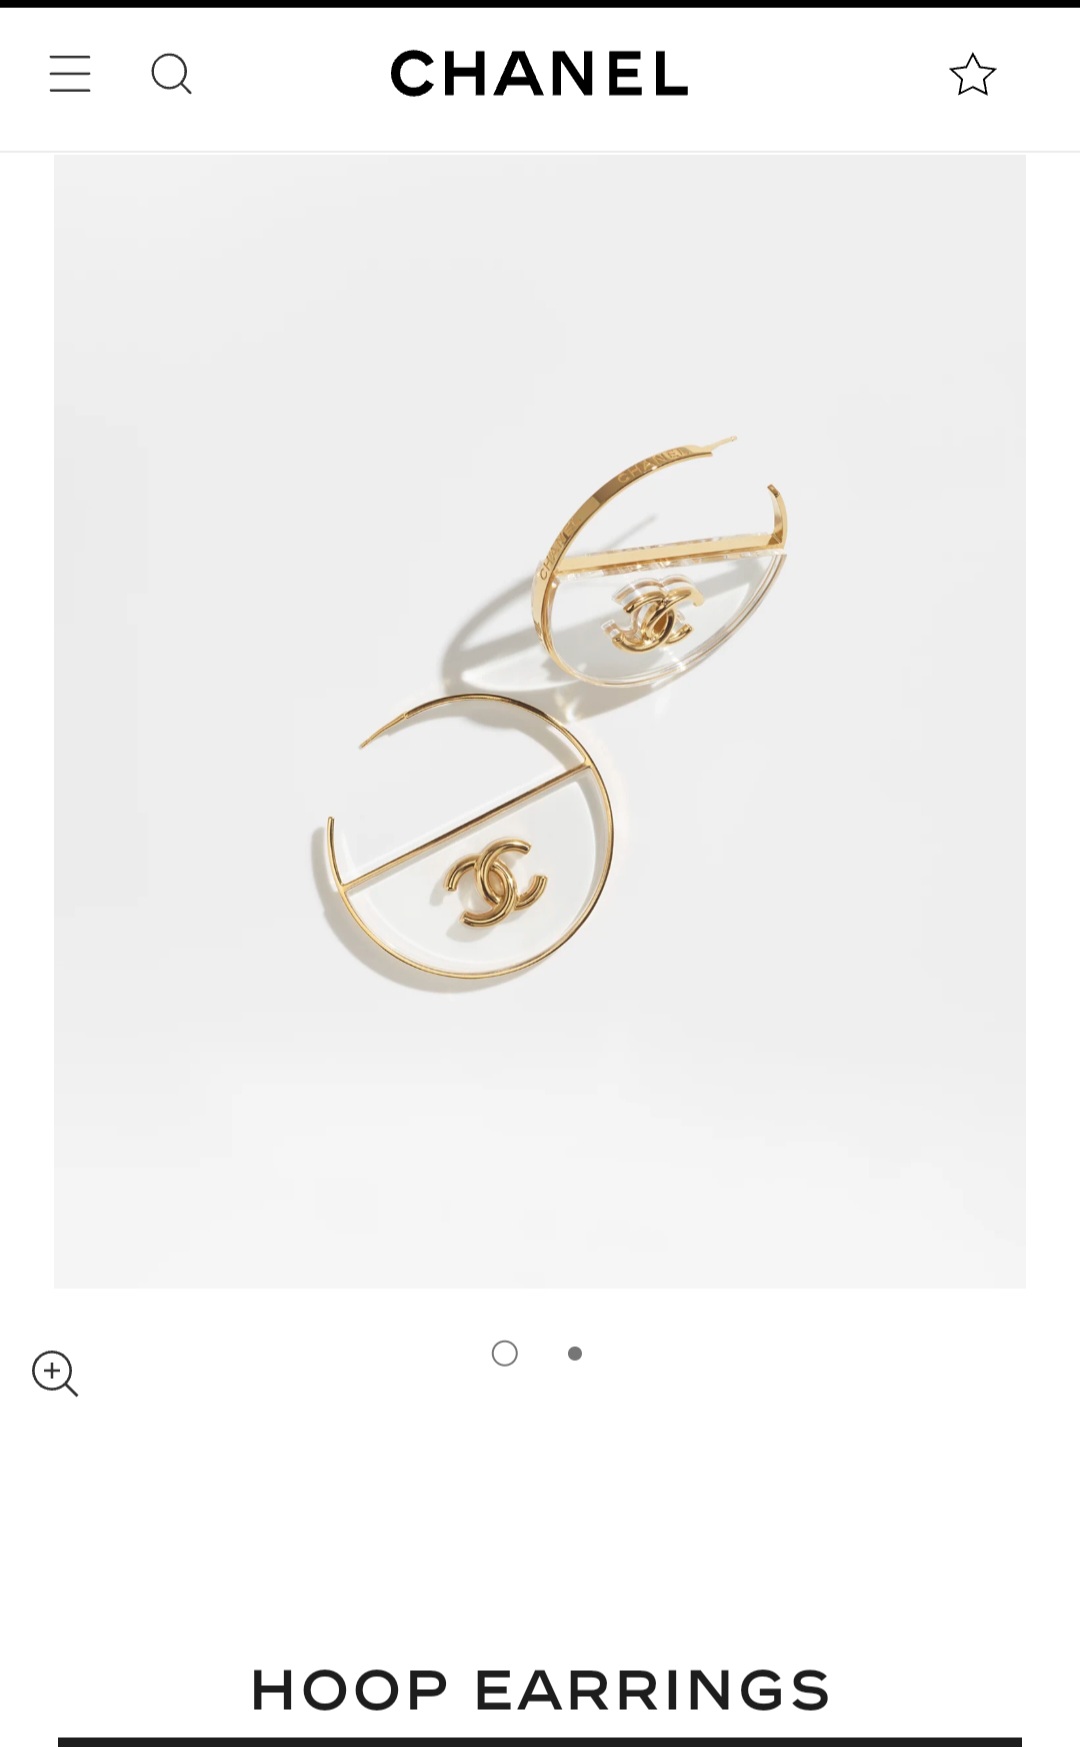 Chanel Hoop earrings